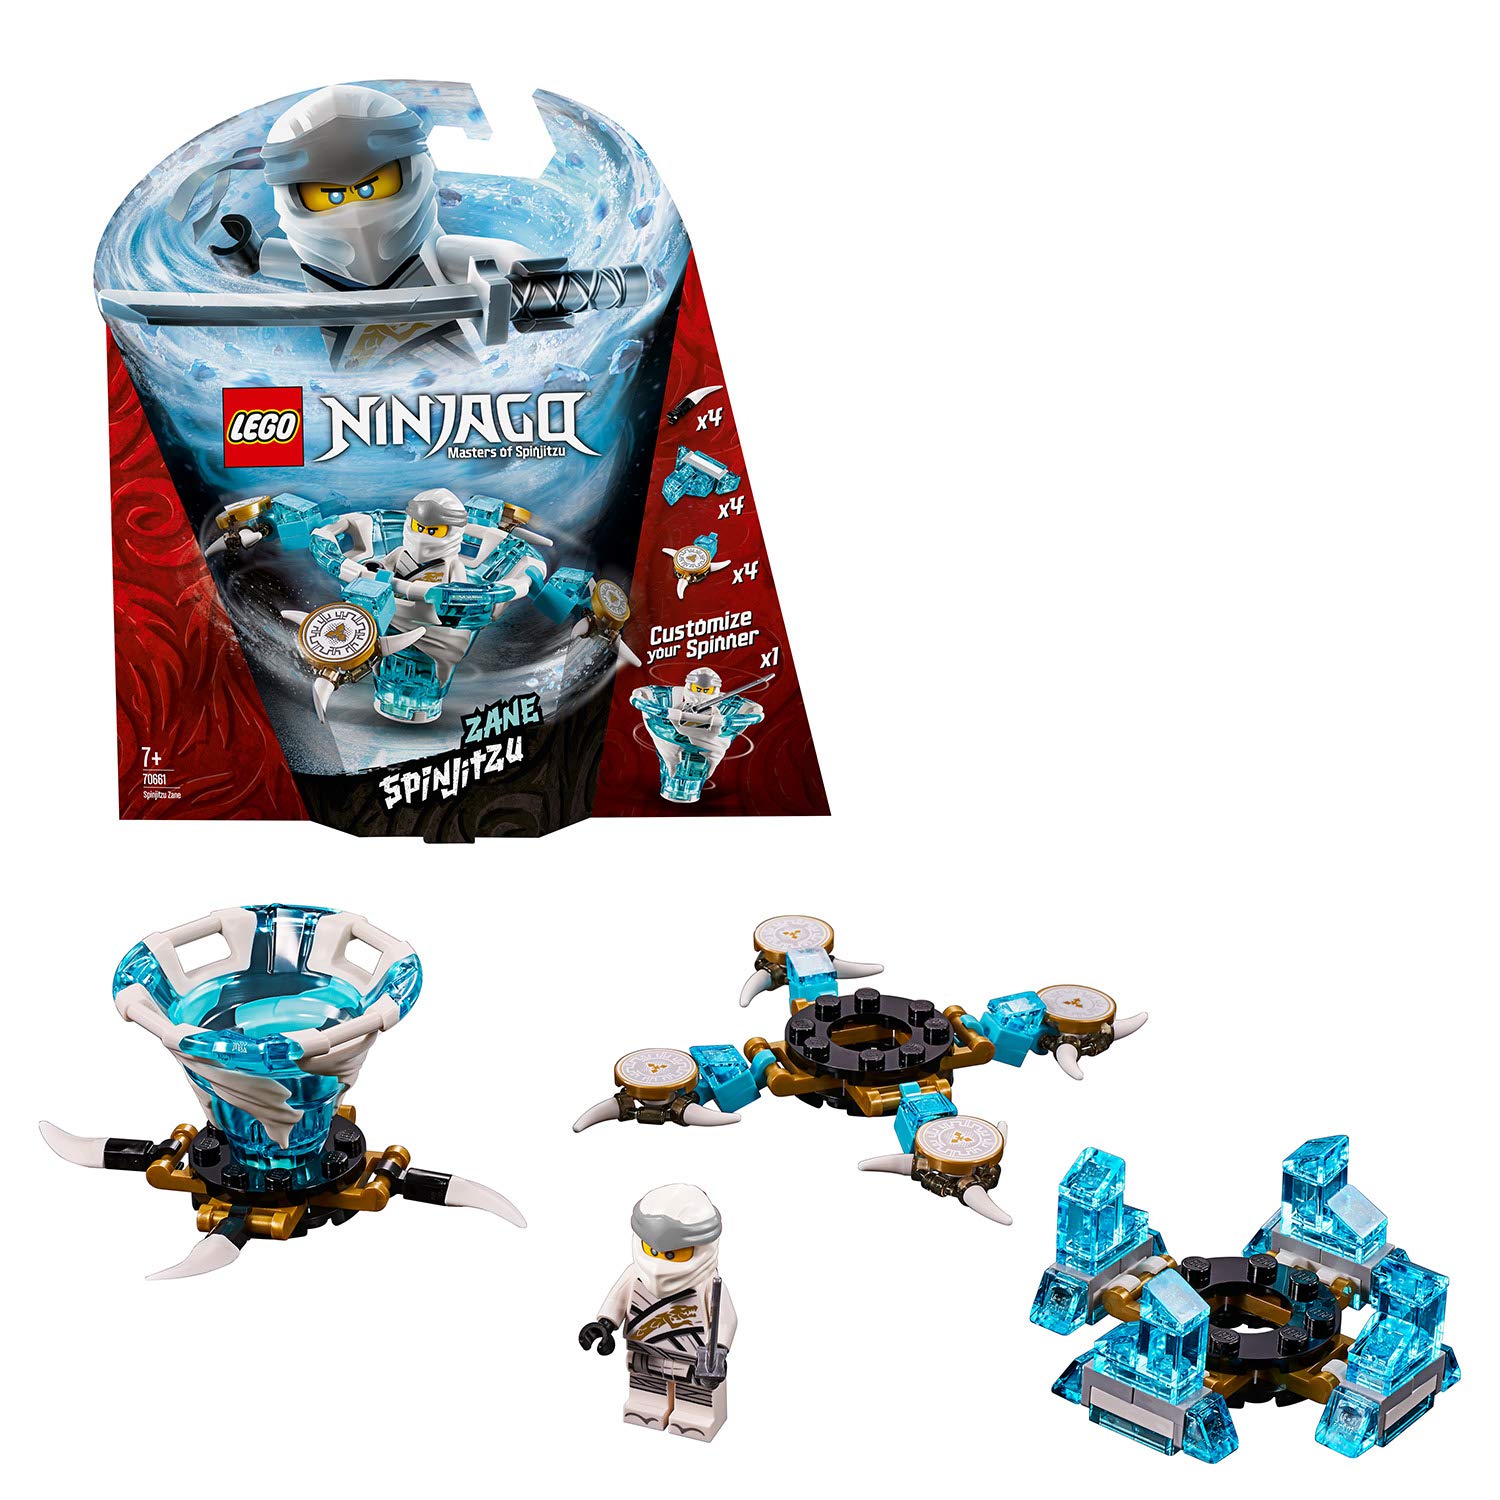 Lego Ninjago 70661, Spinjitzu Zane Figurine